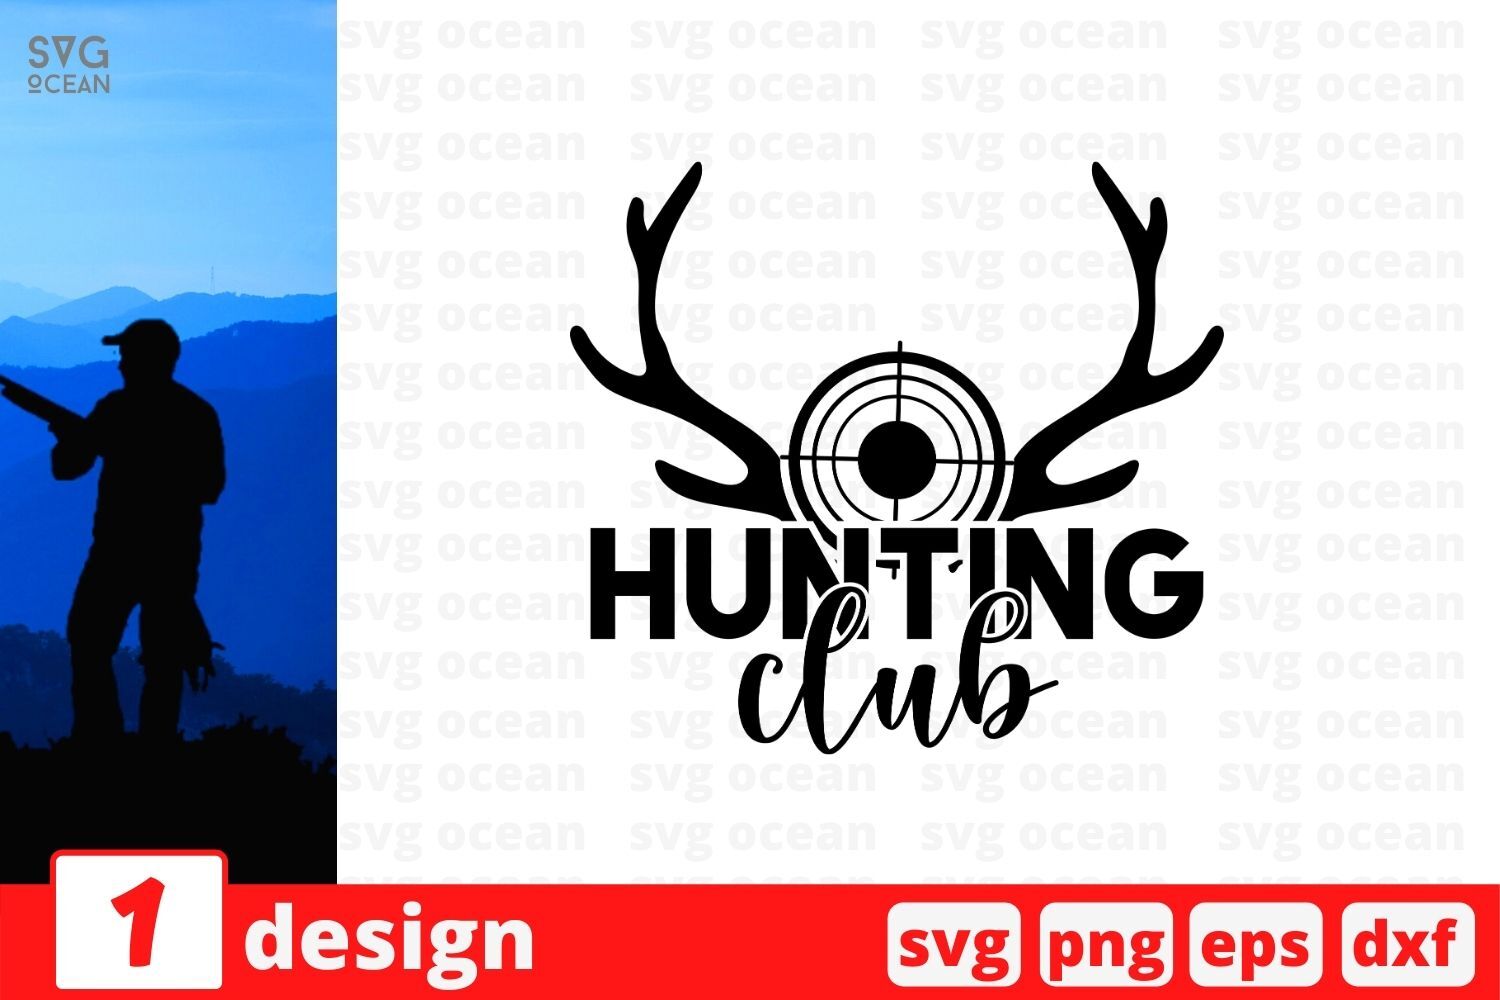 Download Hunting Club Svg Cut File By Svgocean Thehungryjpeg Com